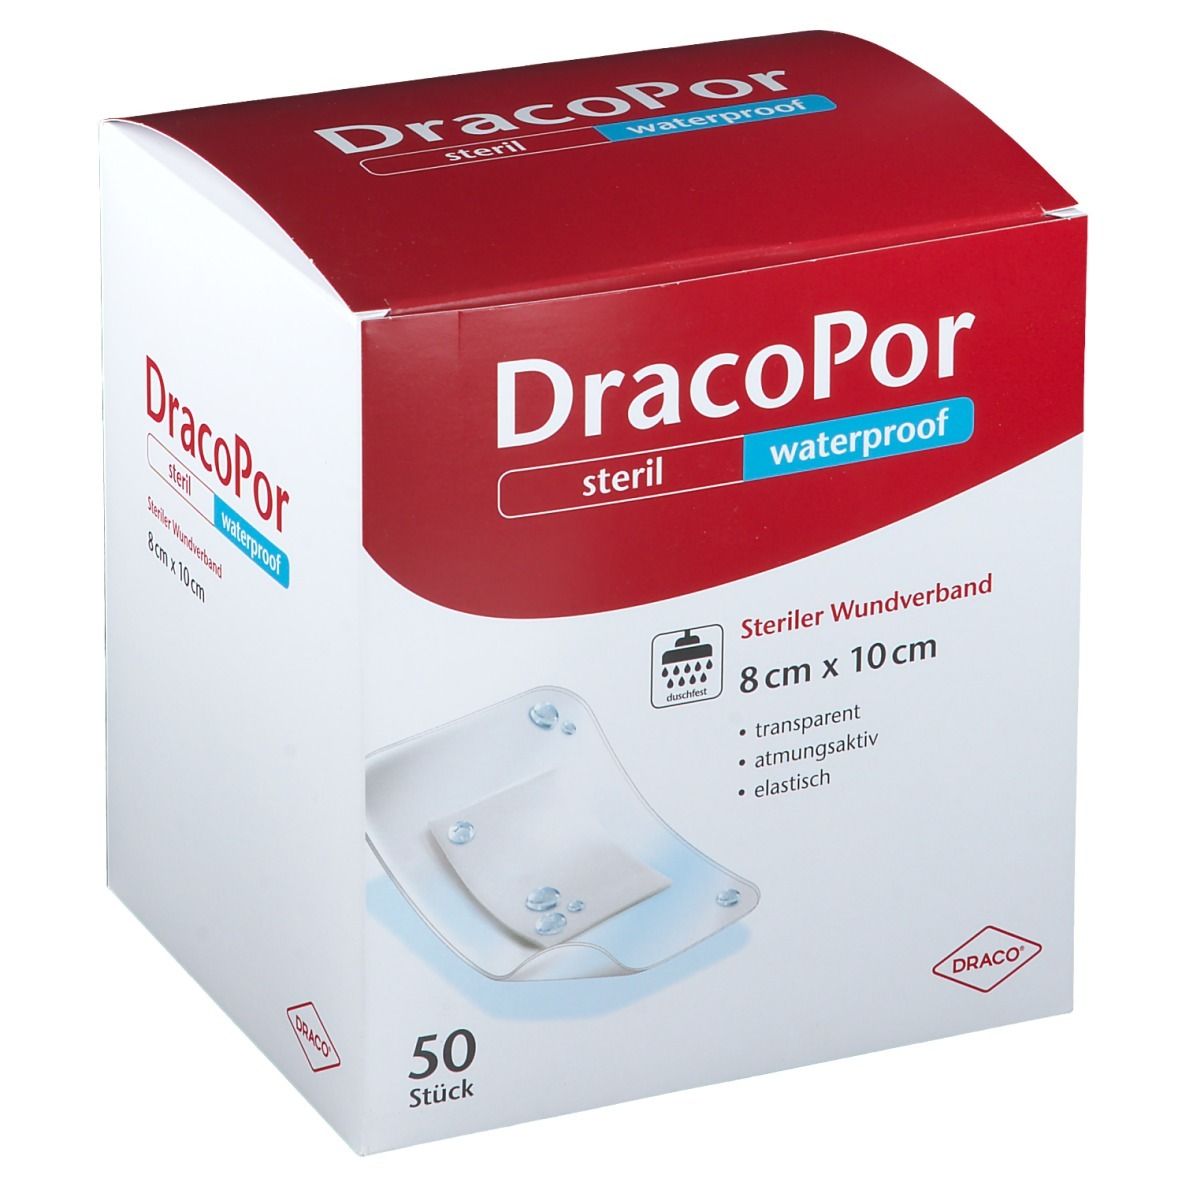 DracoPor Waterproof Wundverband steril 8 x 10 cm